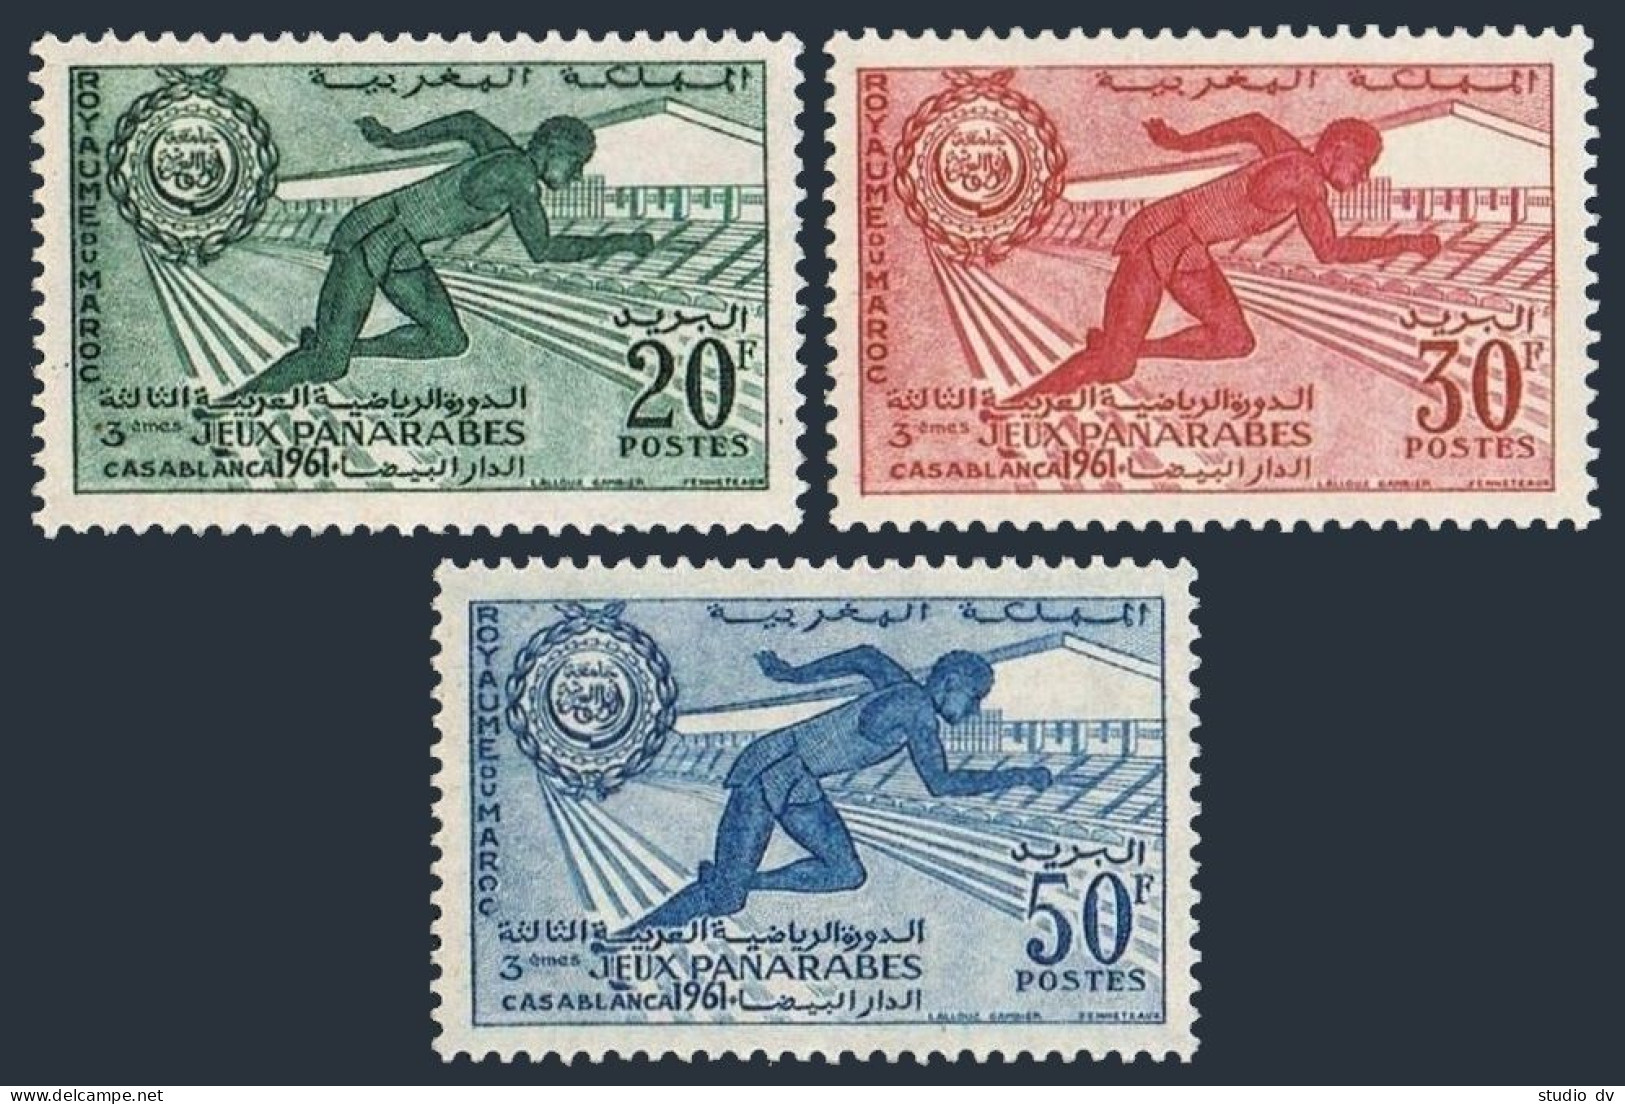 Morocco 53-55,MNH.Michel 470-472. 3rd Pan-Arabic Games,Casablanca,1961.Runner. - Marokko (1956-...)